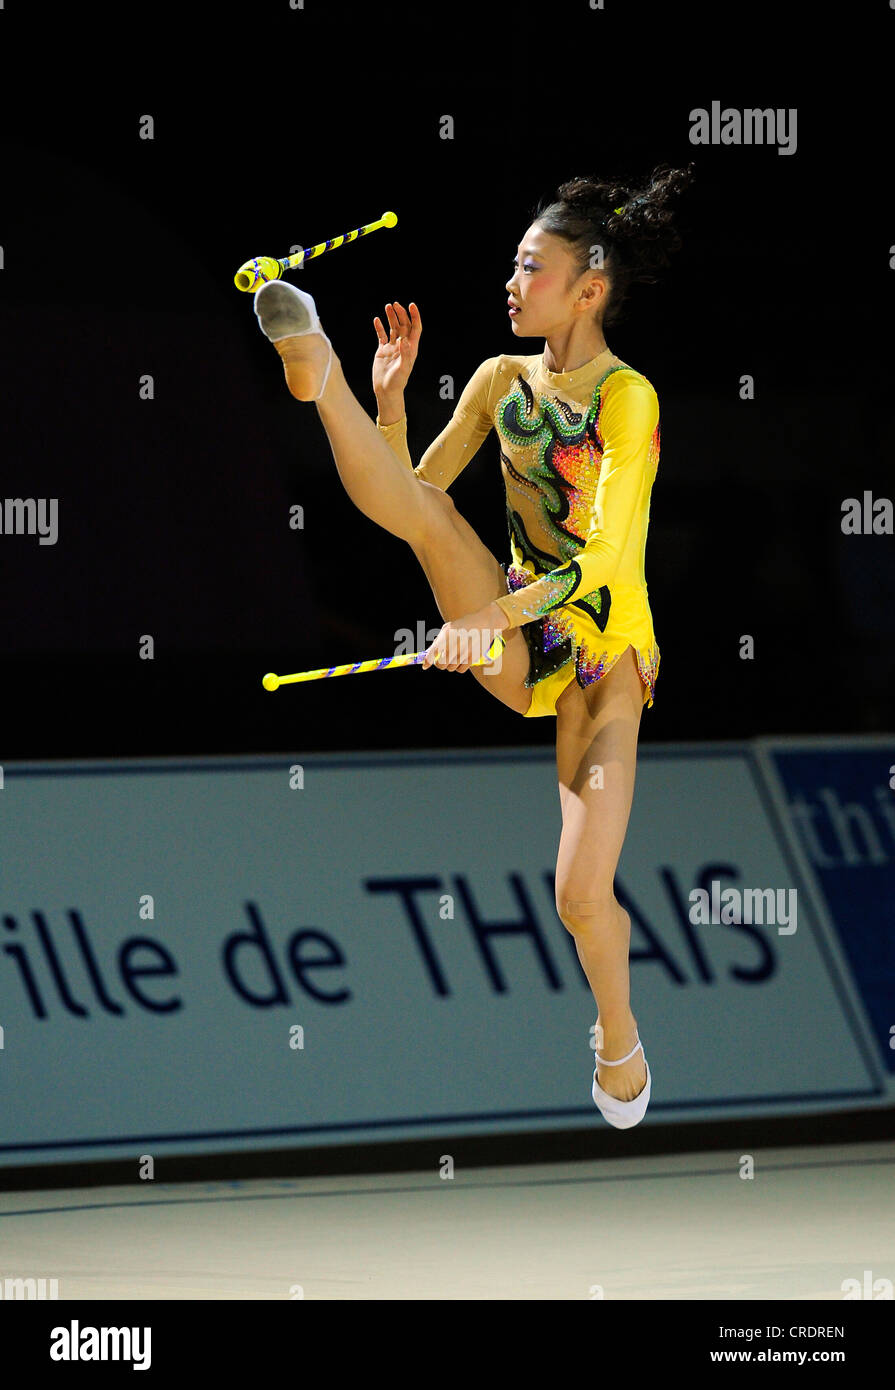 woman doing rhythmic gymnastics with clubs Stock Photo